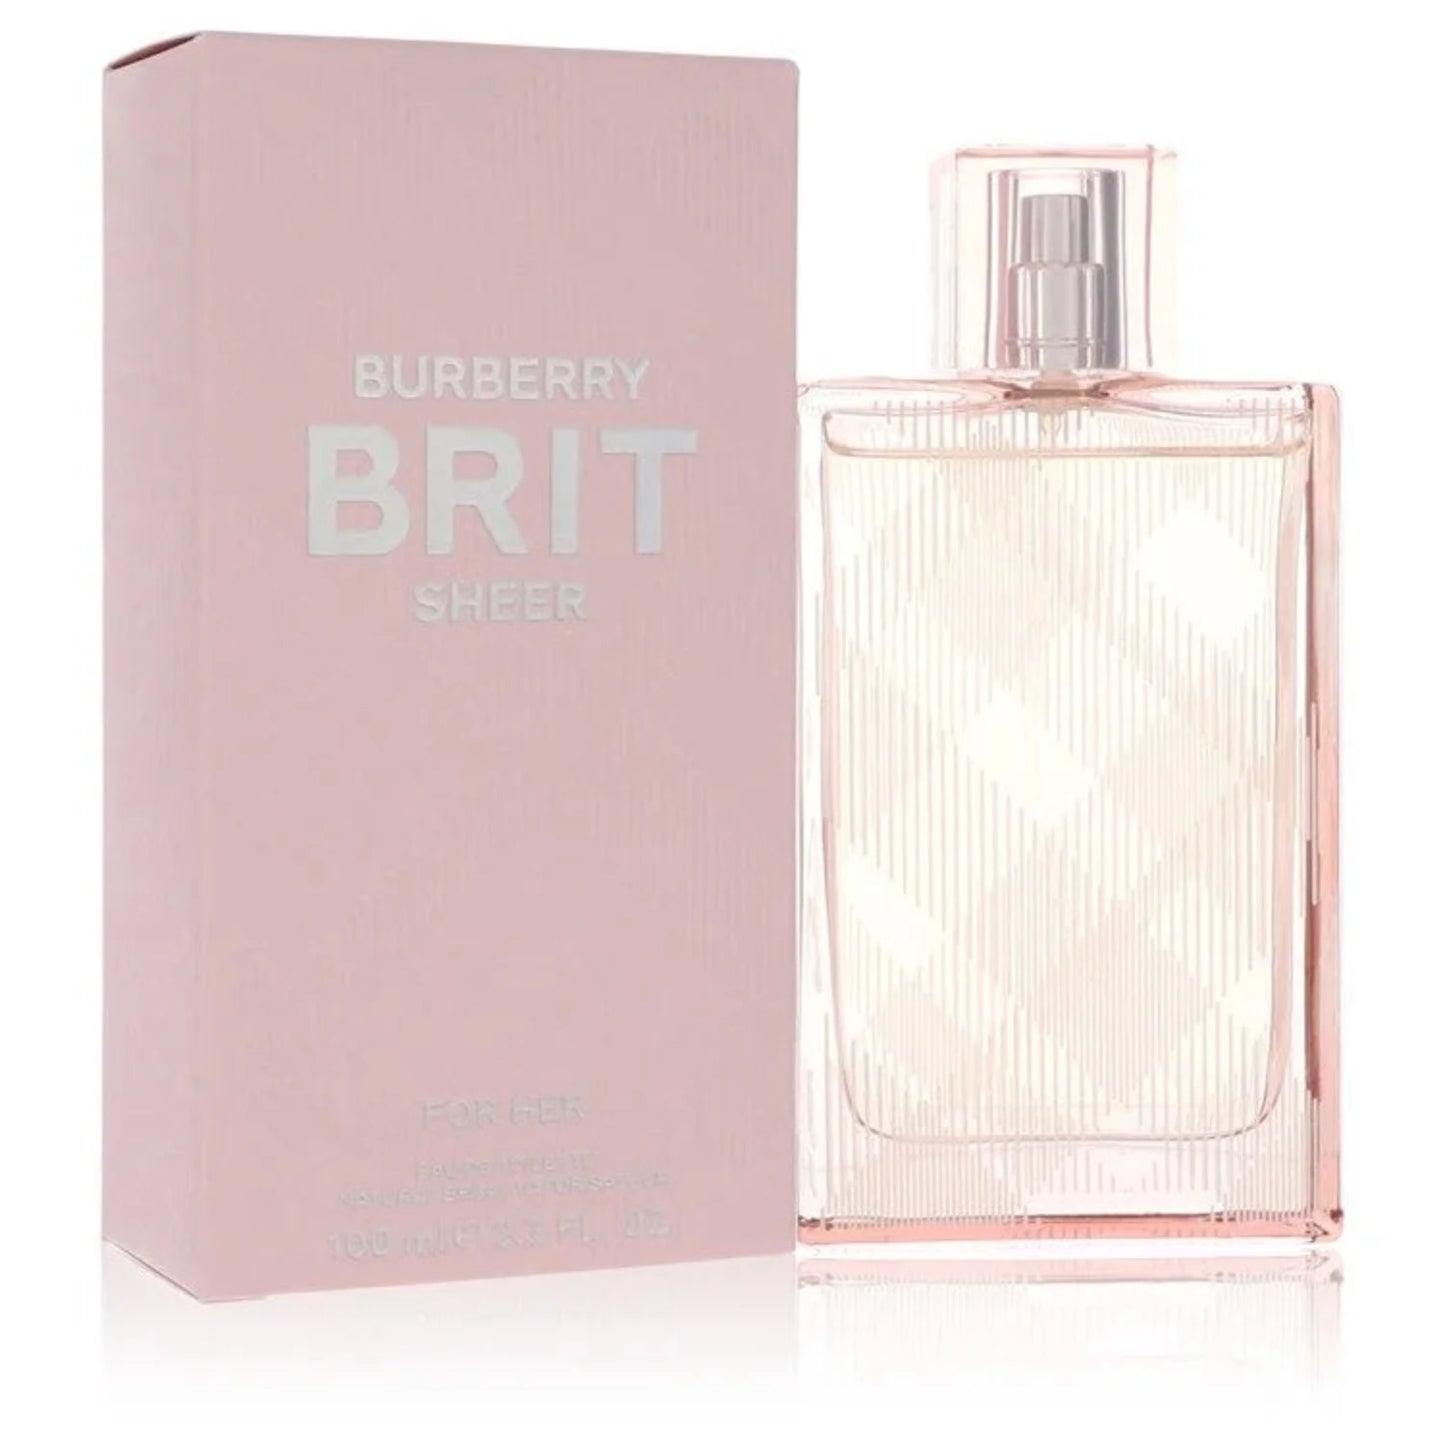 Burberry Brit Sheer Eau De Toilette Spray By Burberry for women